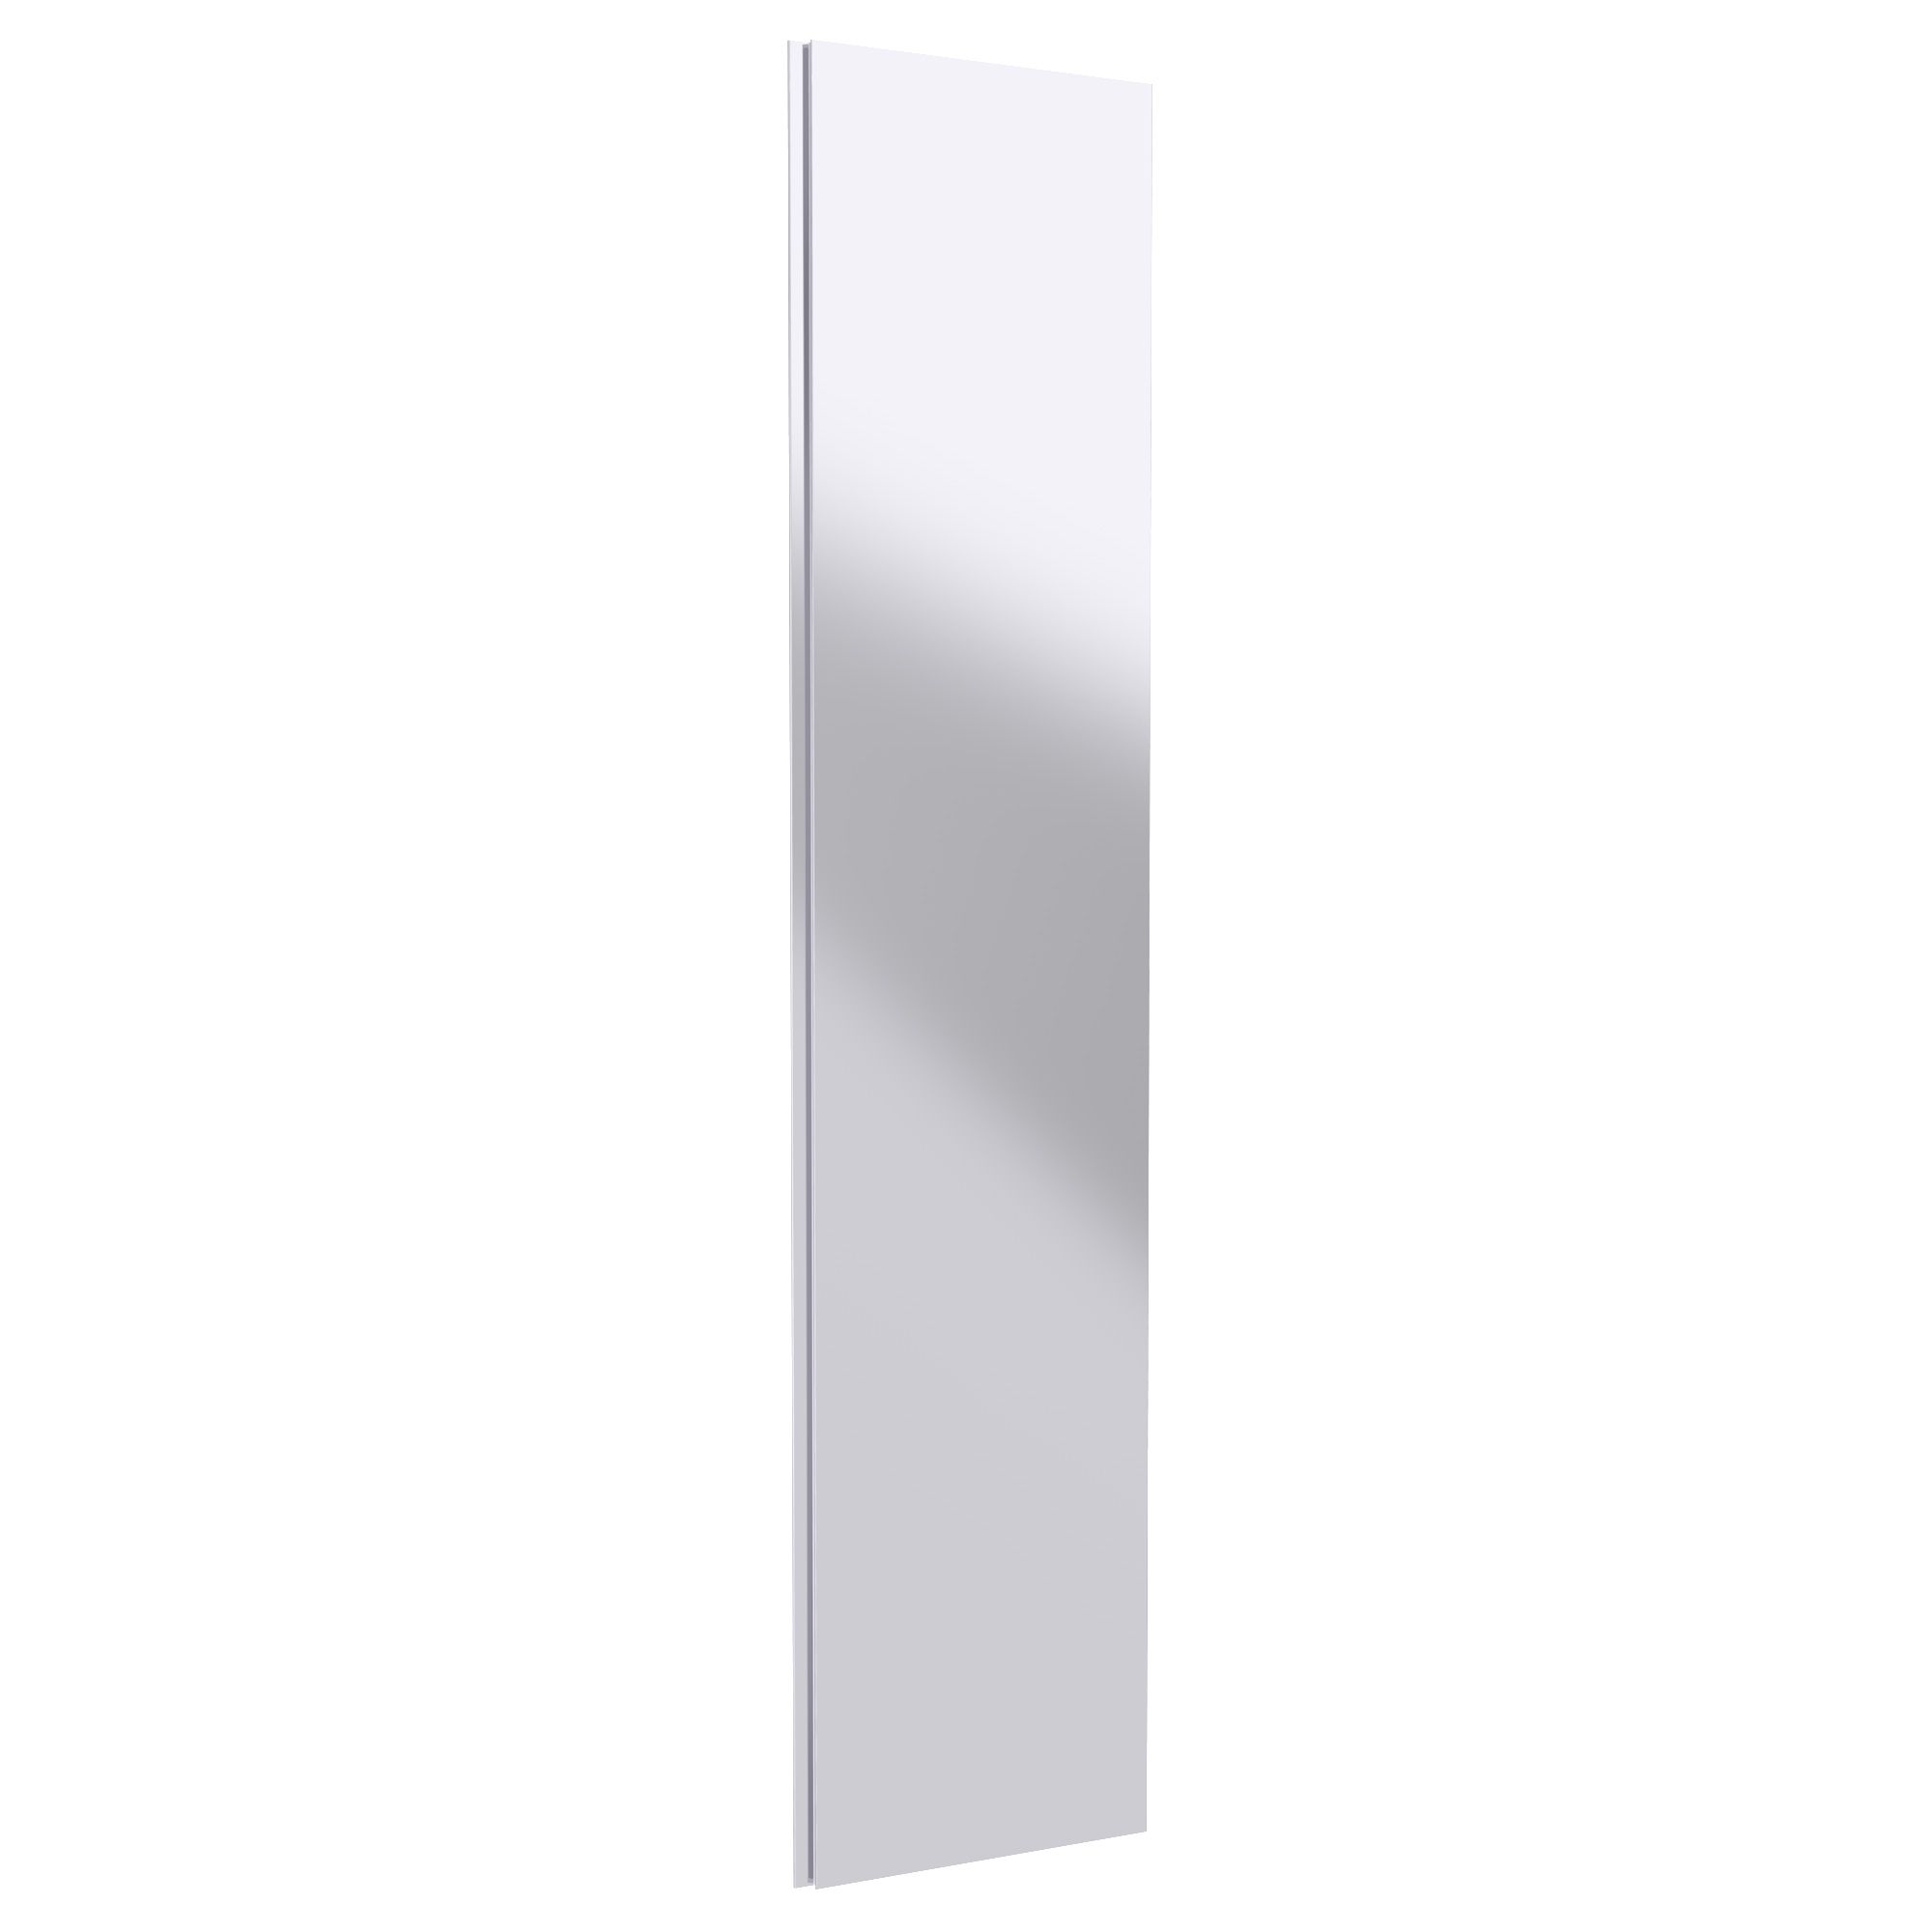 Form Darwin Modular Mirrored Large Wardrobe door (H)2288mm (W)497mm